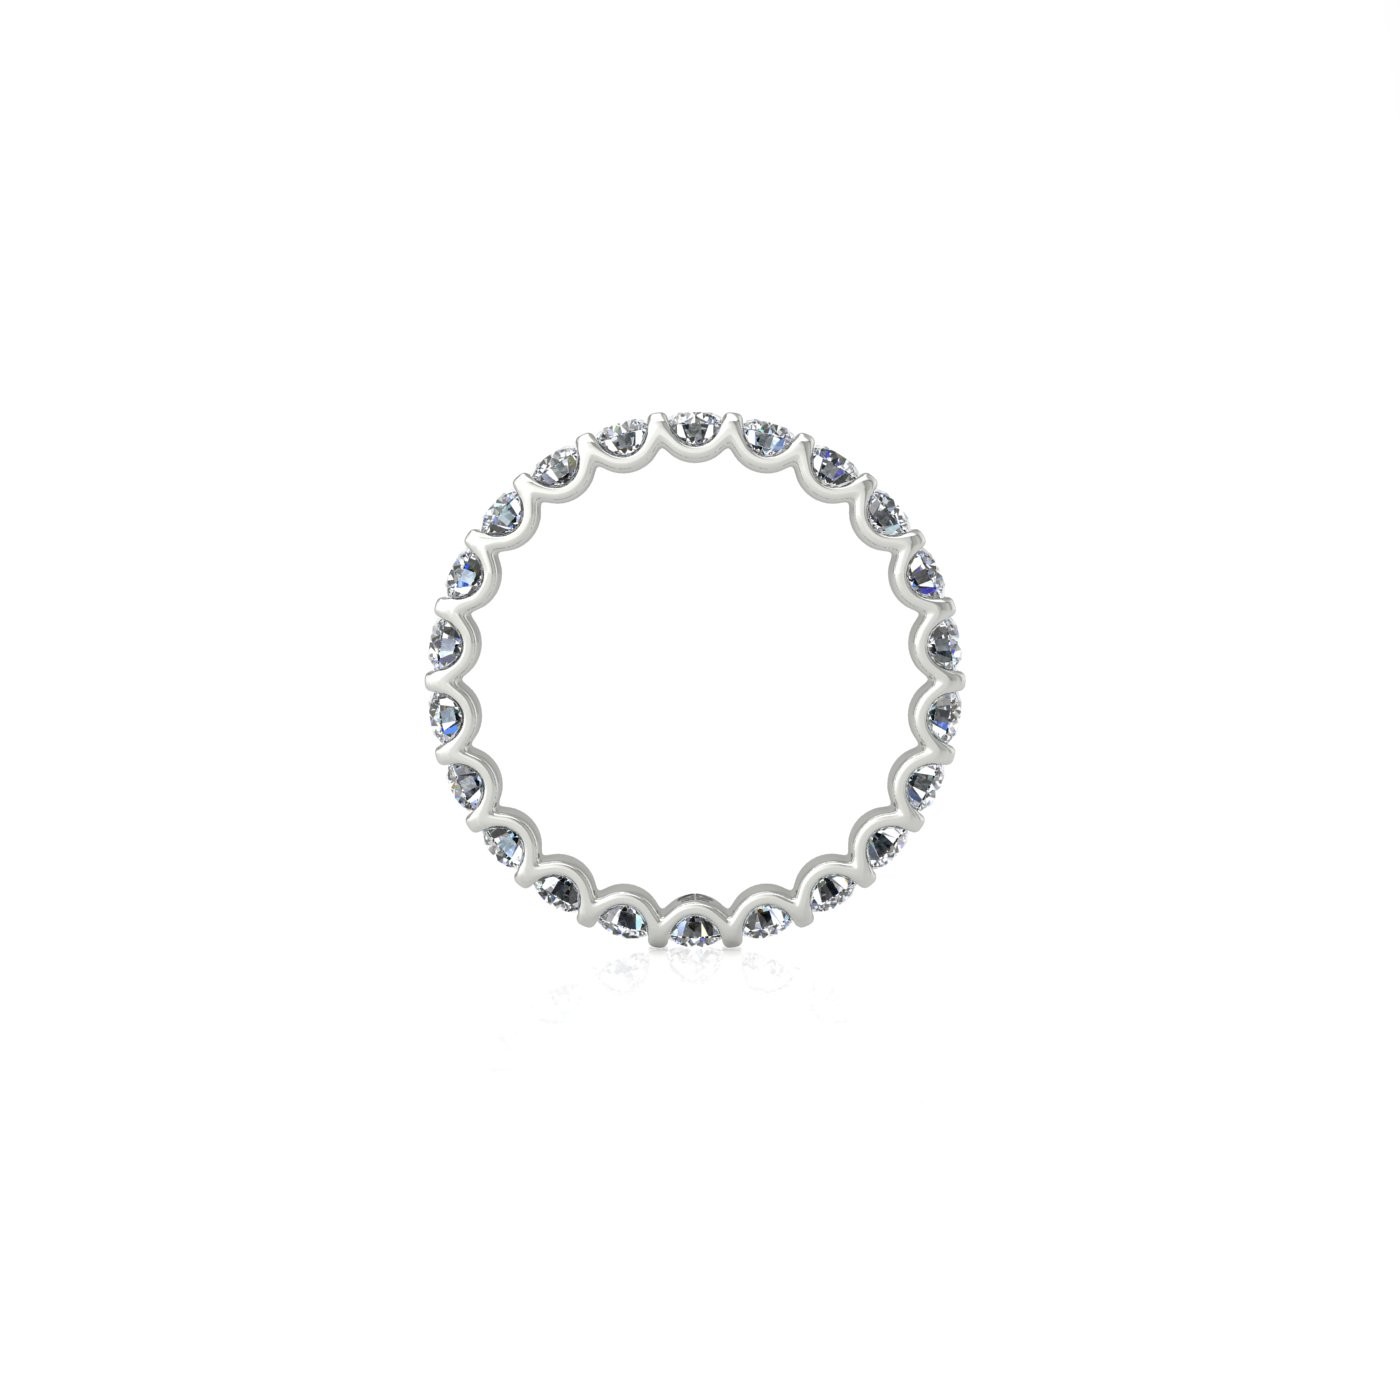 18k white gold  round shape diamond full eternity ring in u-prong setting Photos & images